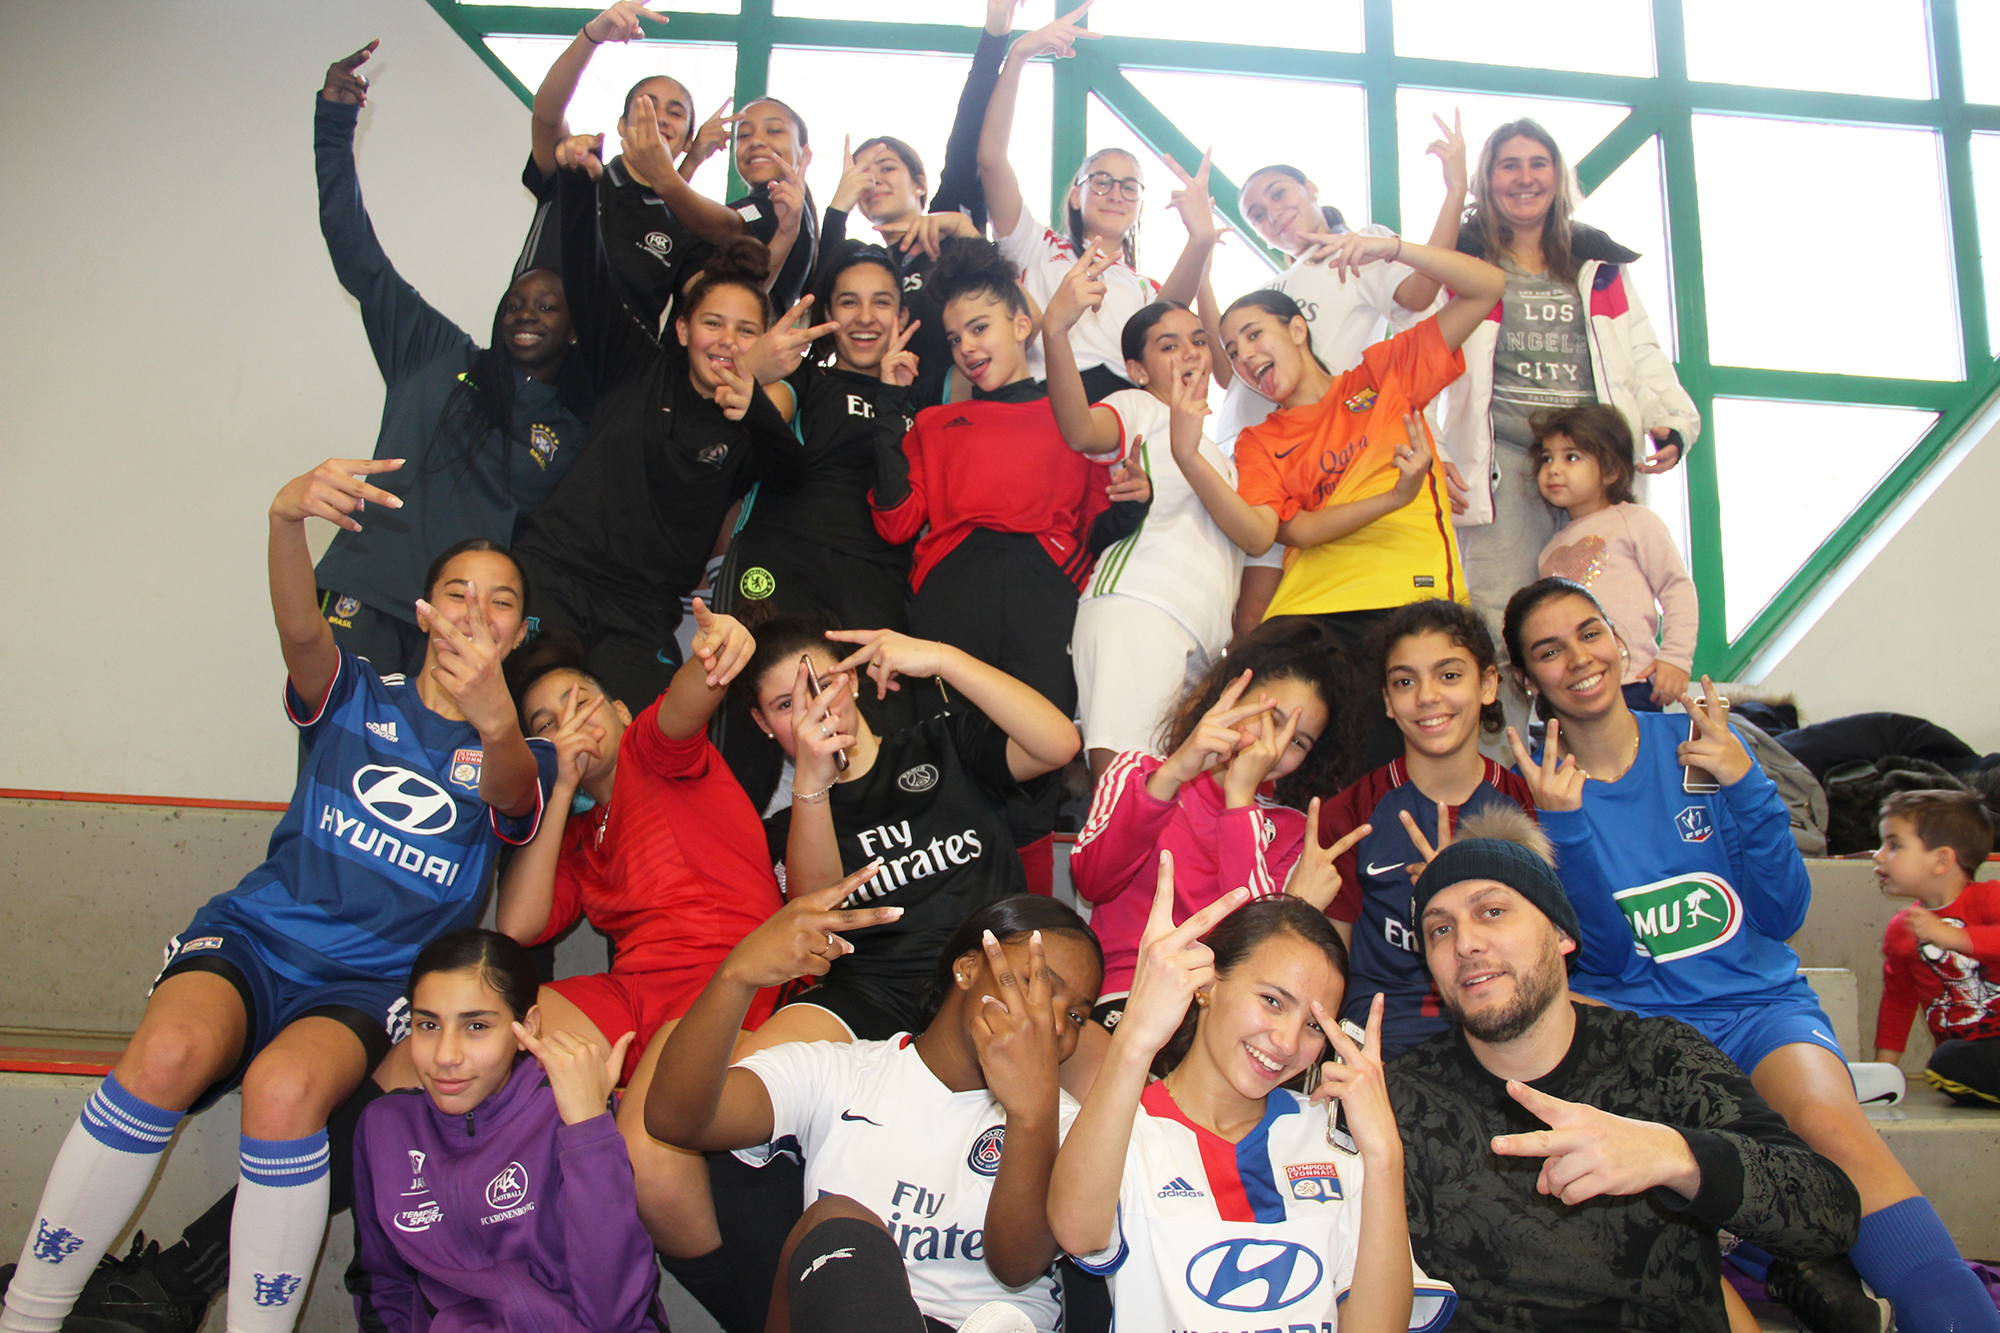 Tournoi Futsal Association AMI Hautepierre 9